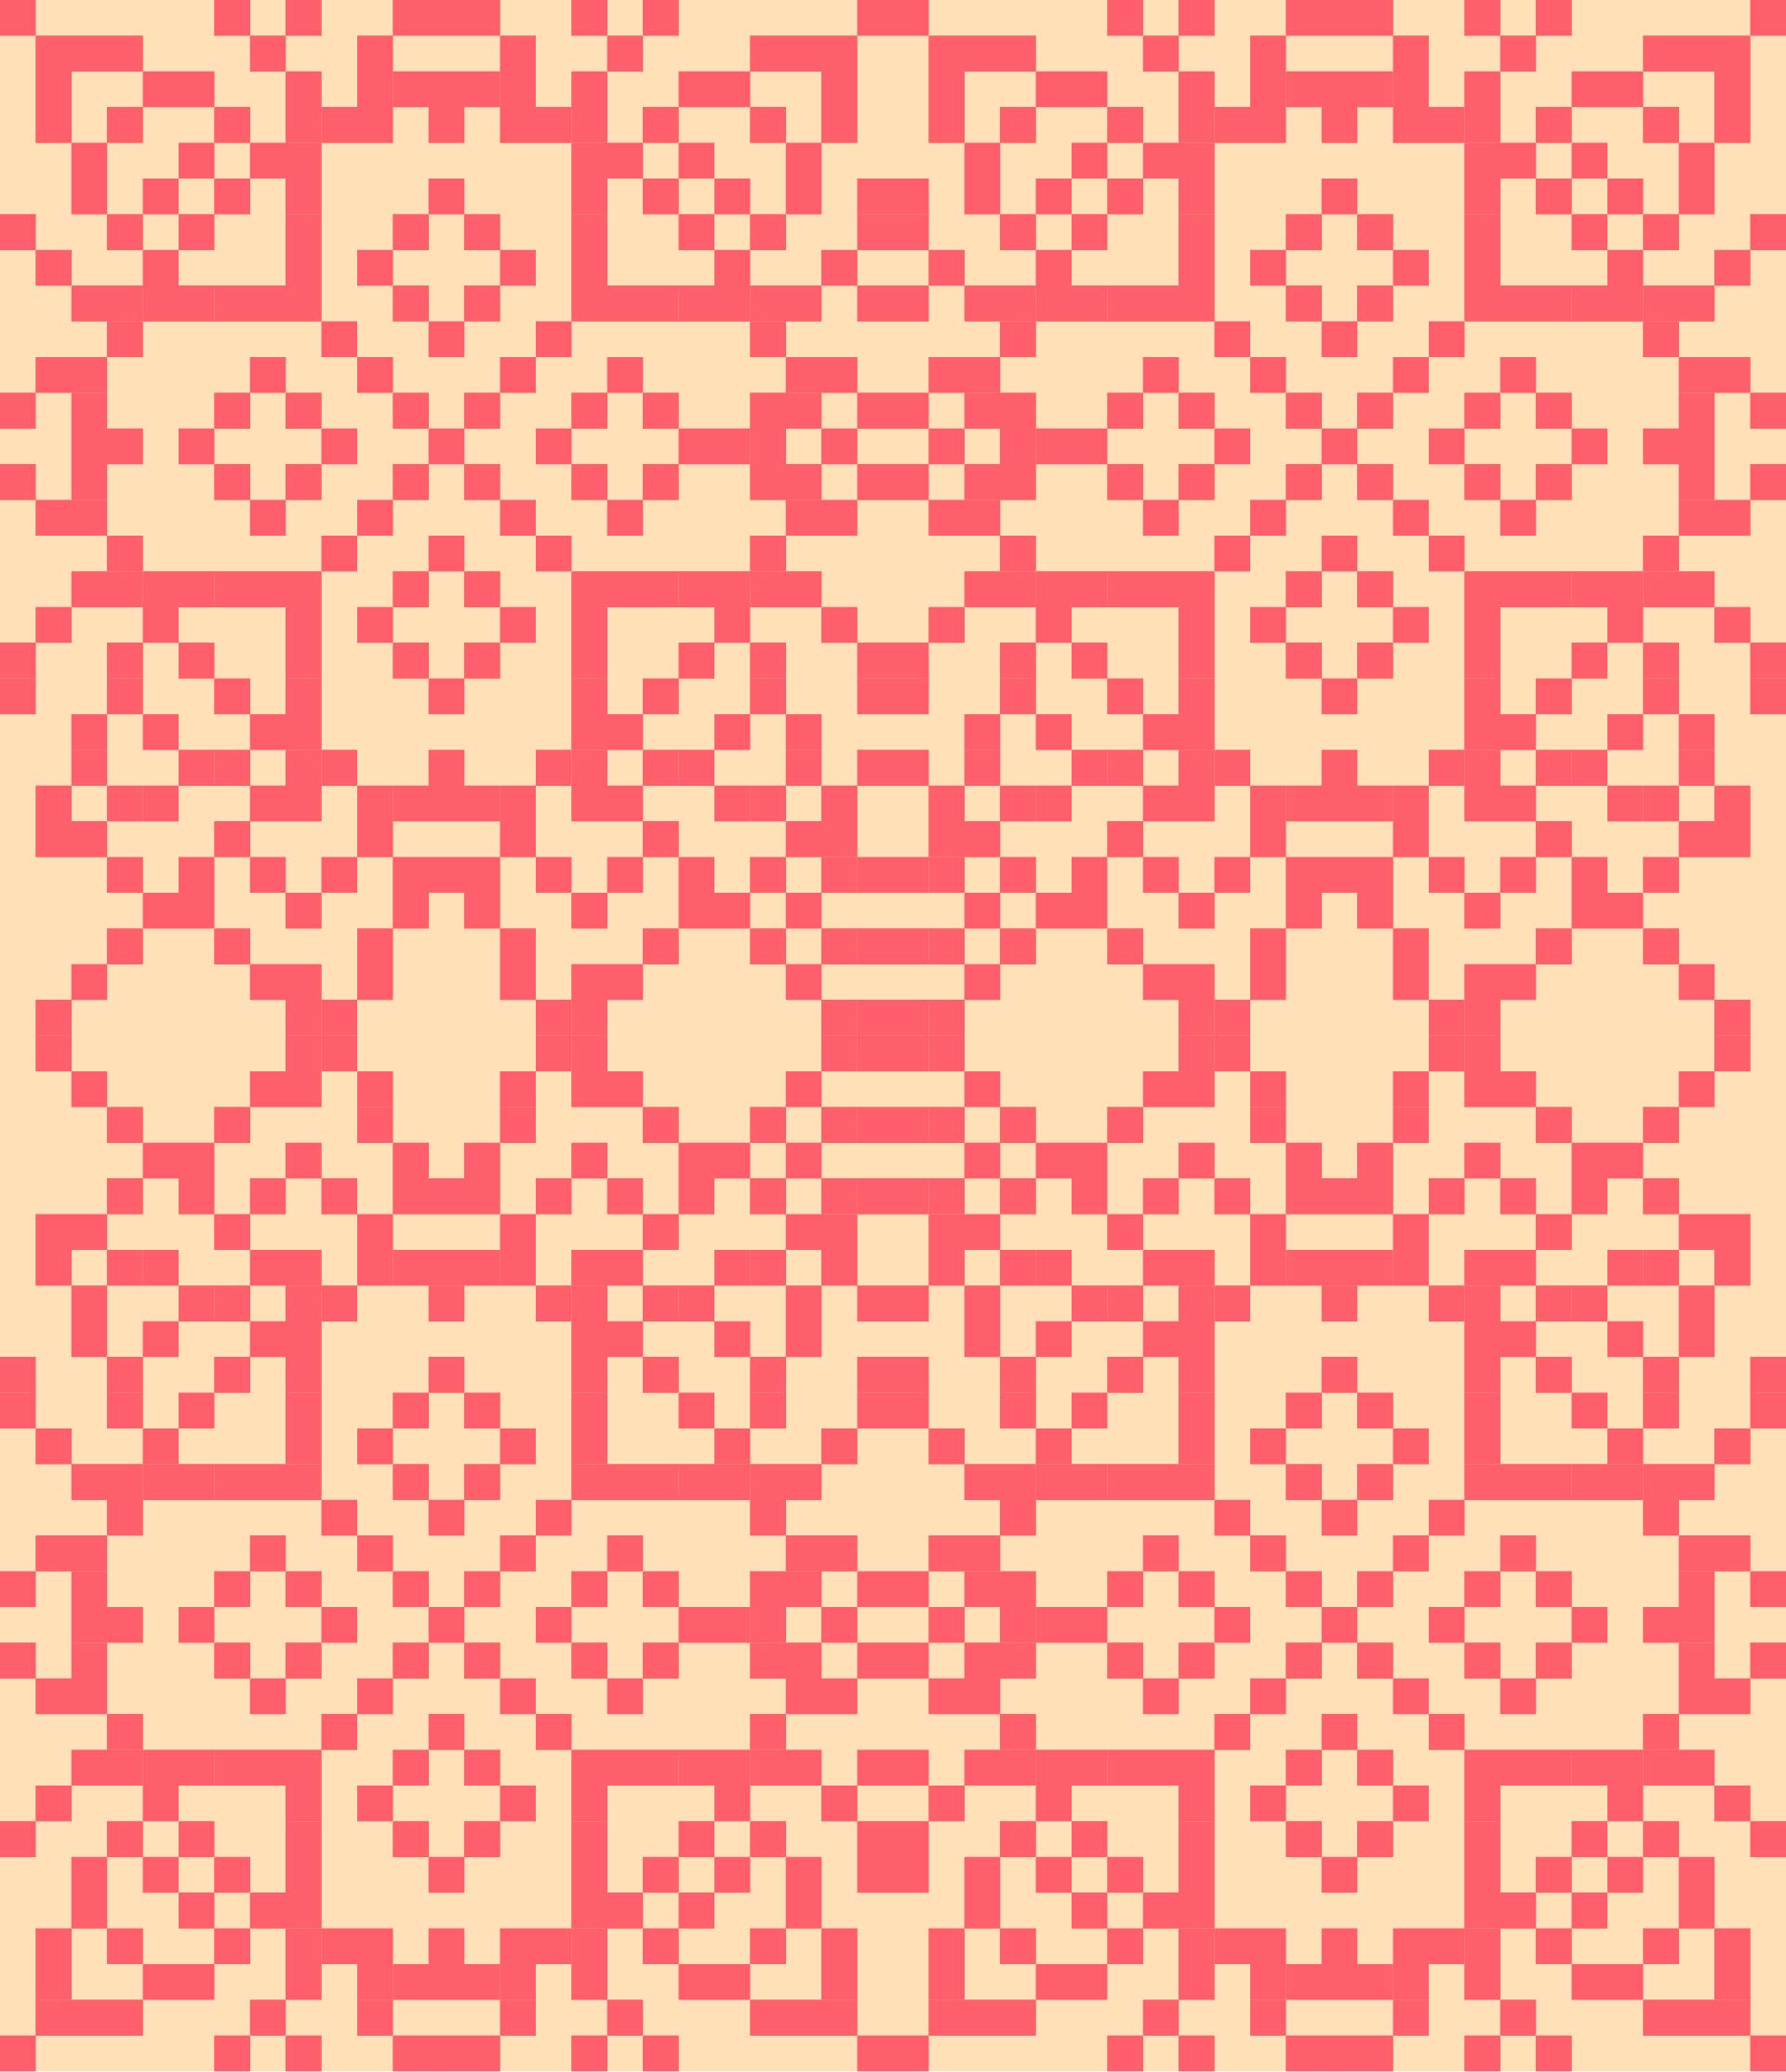 Printable Cross Stitch Sampler Patterns